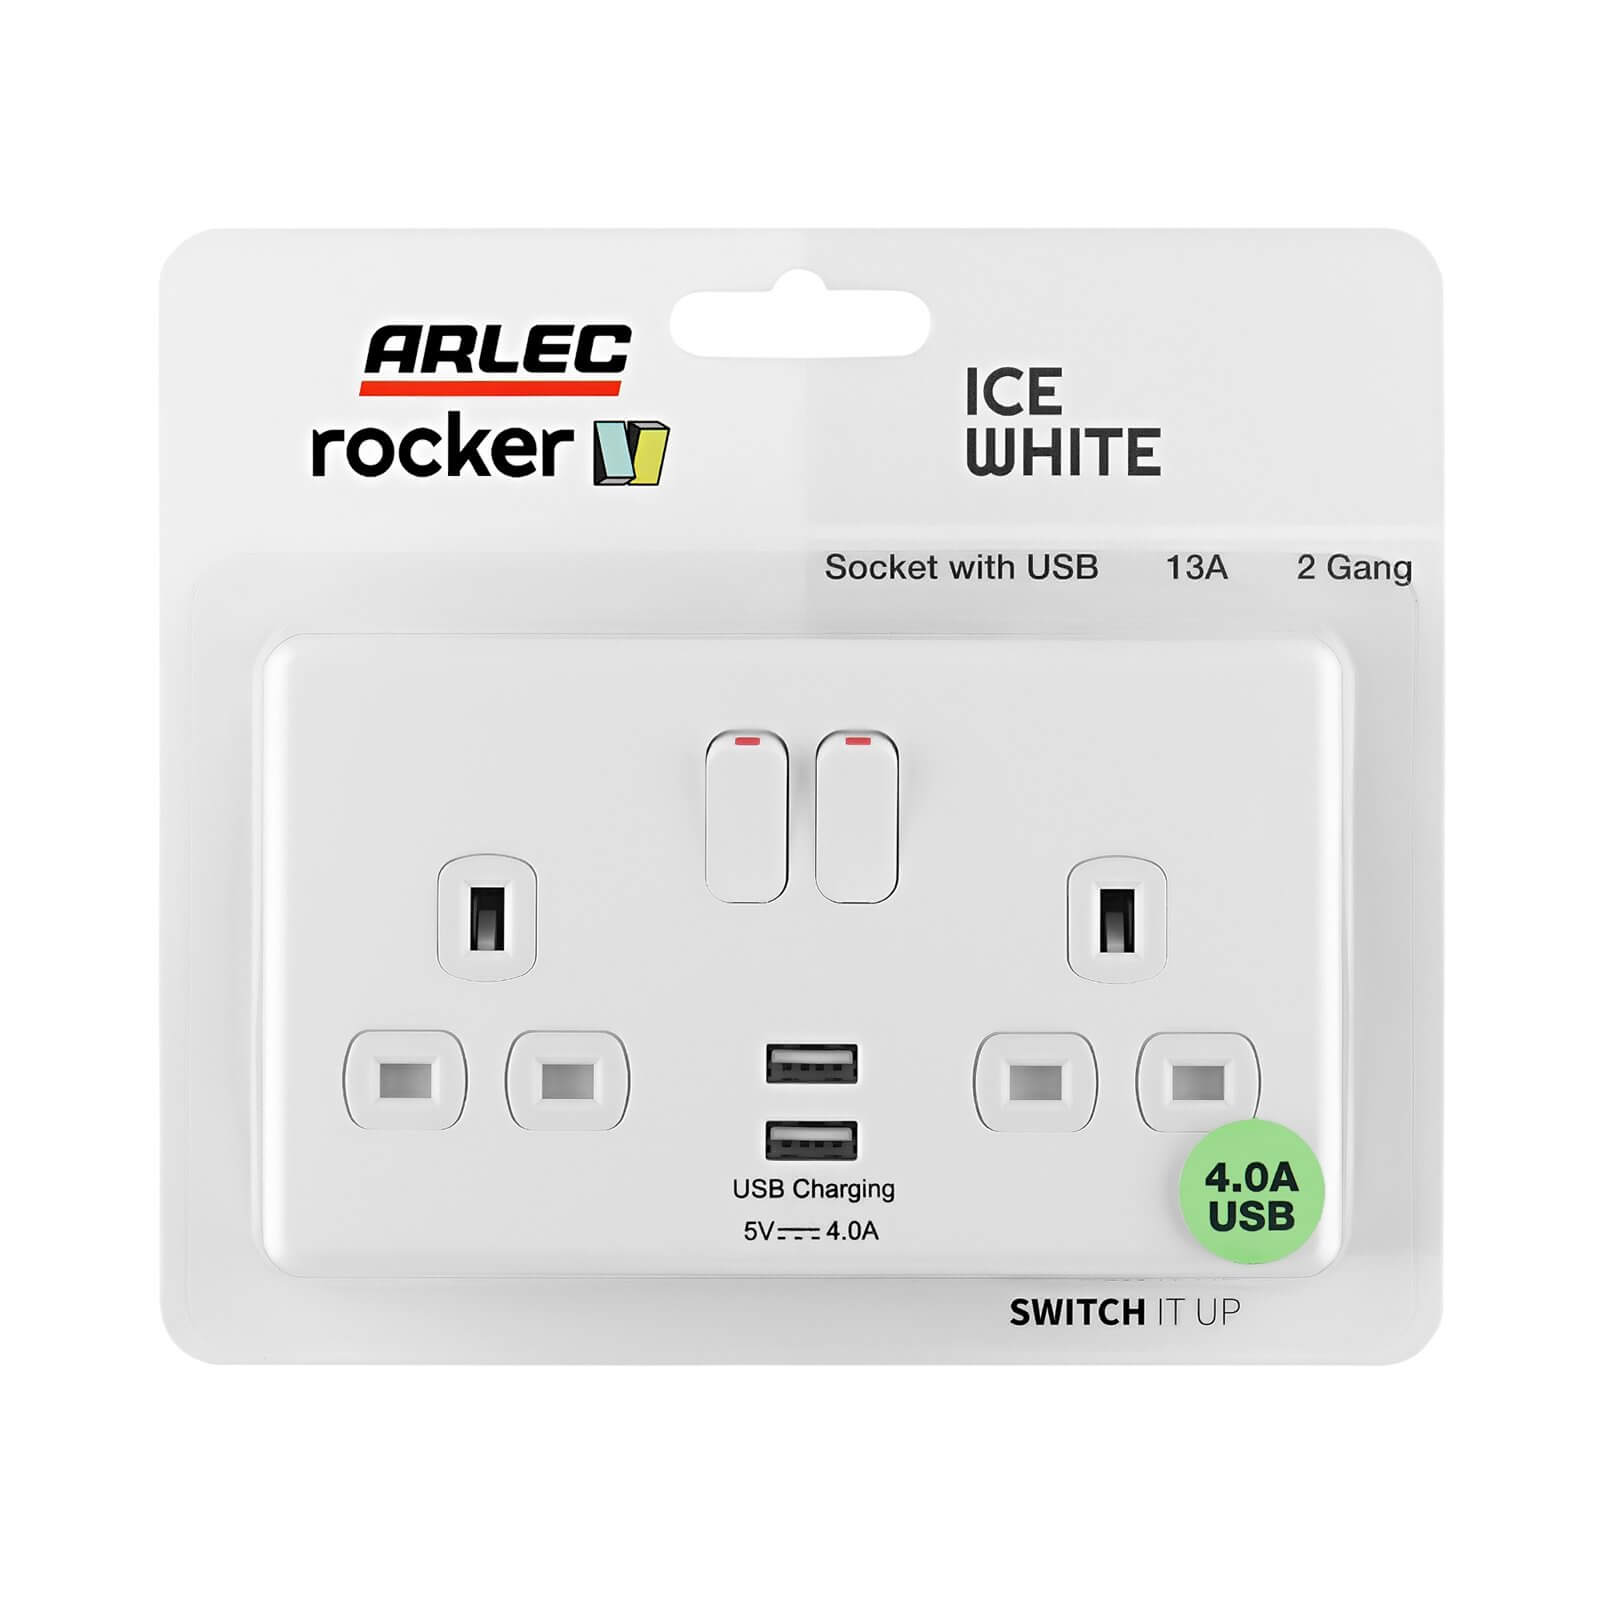 Arlec Rocker Ice White  Double USB Socket 2 x 4A USB